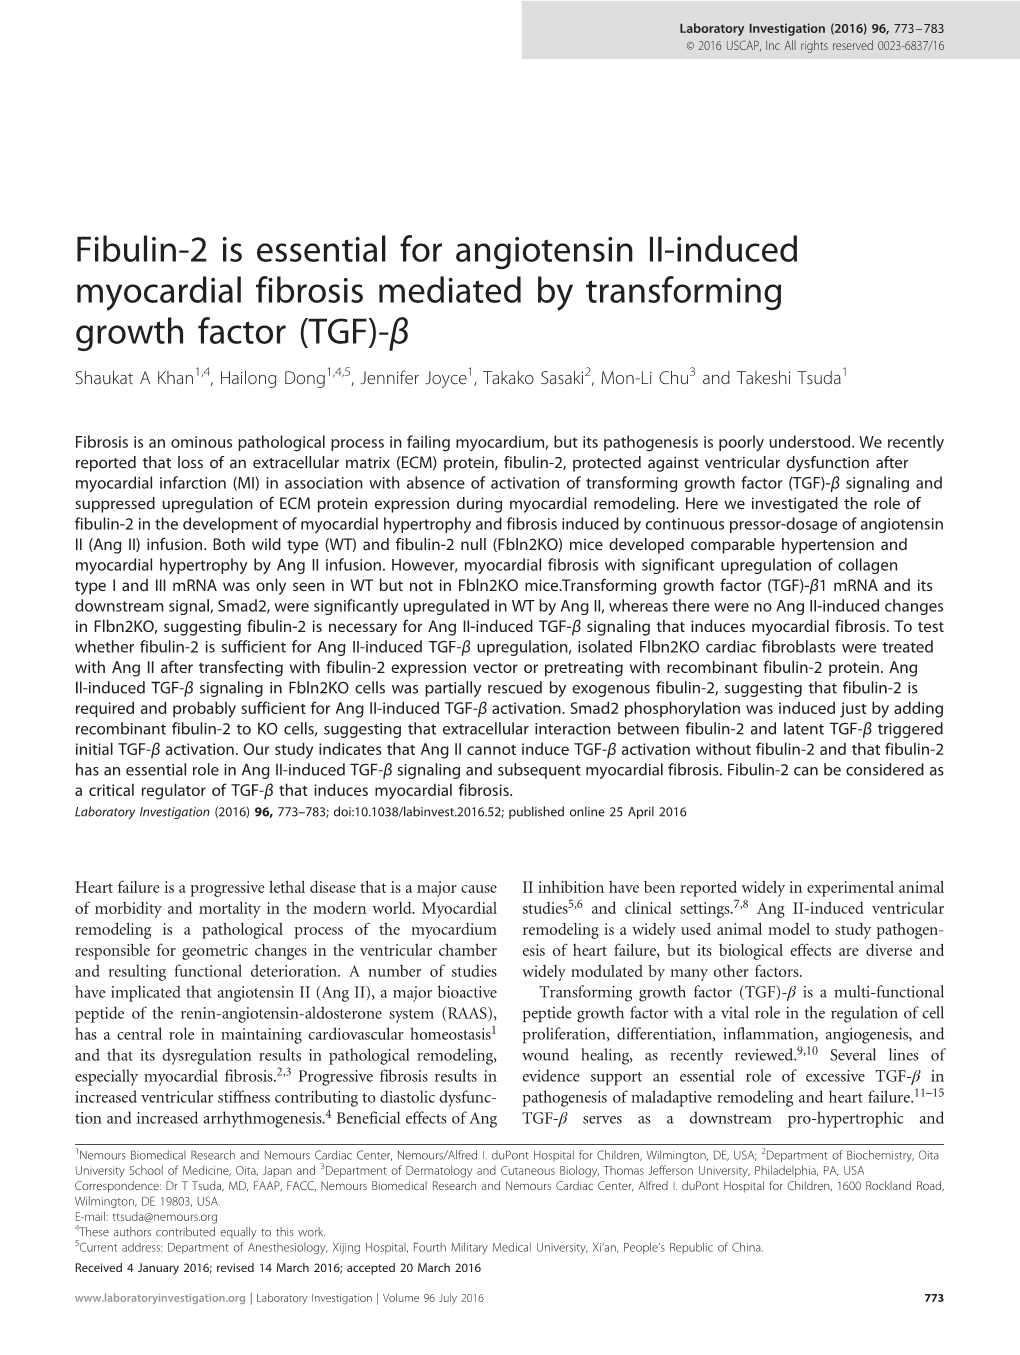 Fibulin-2 Is Essential for Angiotensin II-Induced Myocardial Fibrosis